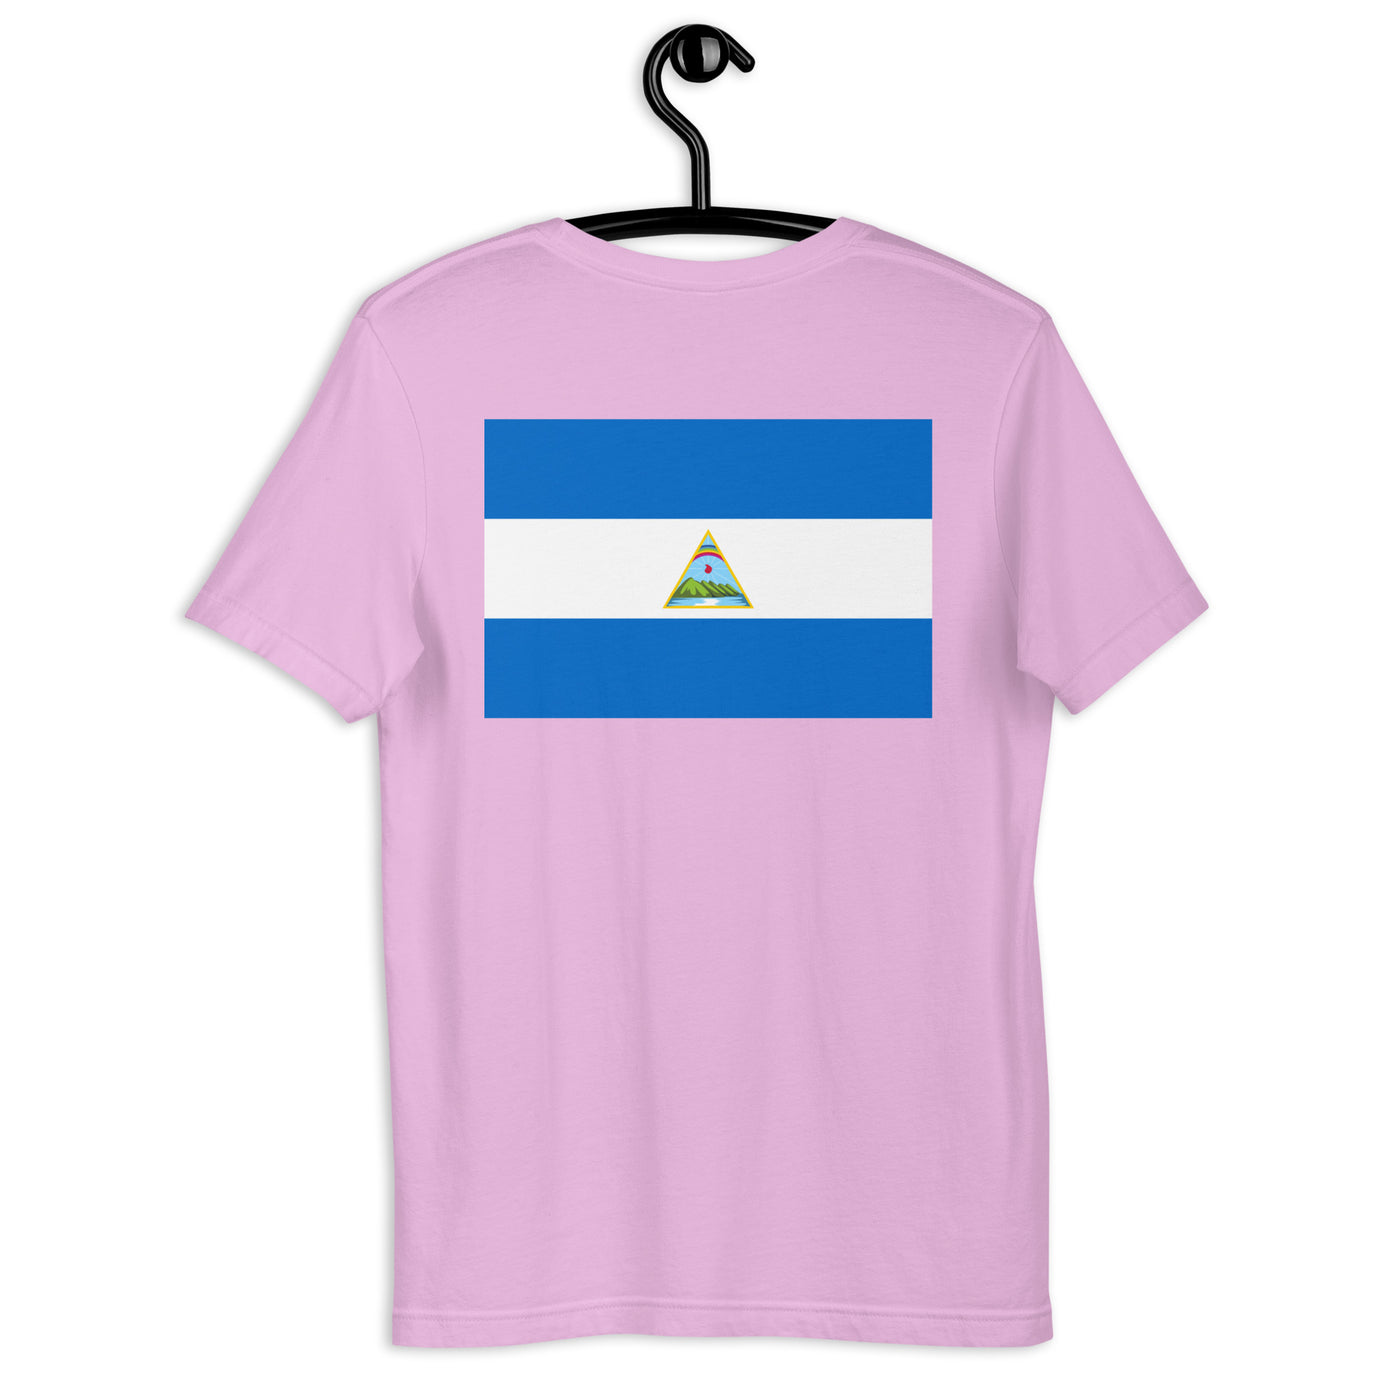 Nicaragua  POR VIDA (Black Text) Unisex t-shirt